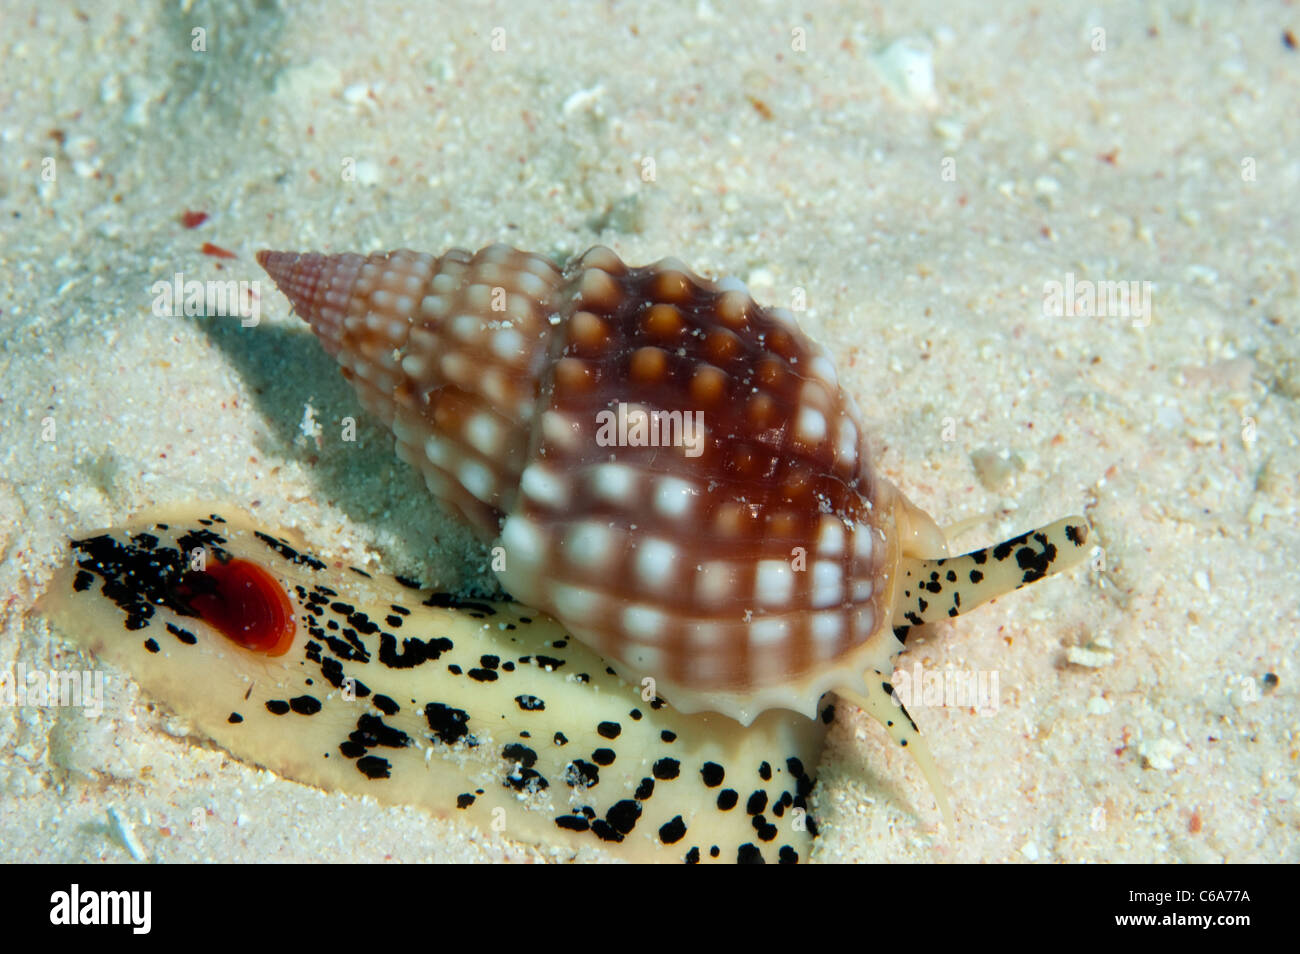 Whelk Snail, Nassarius papillosus, Kribati South Pacific Stock Photo